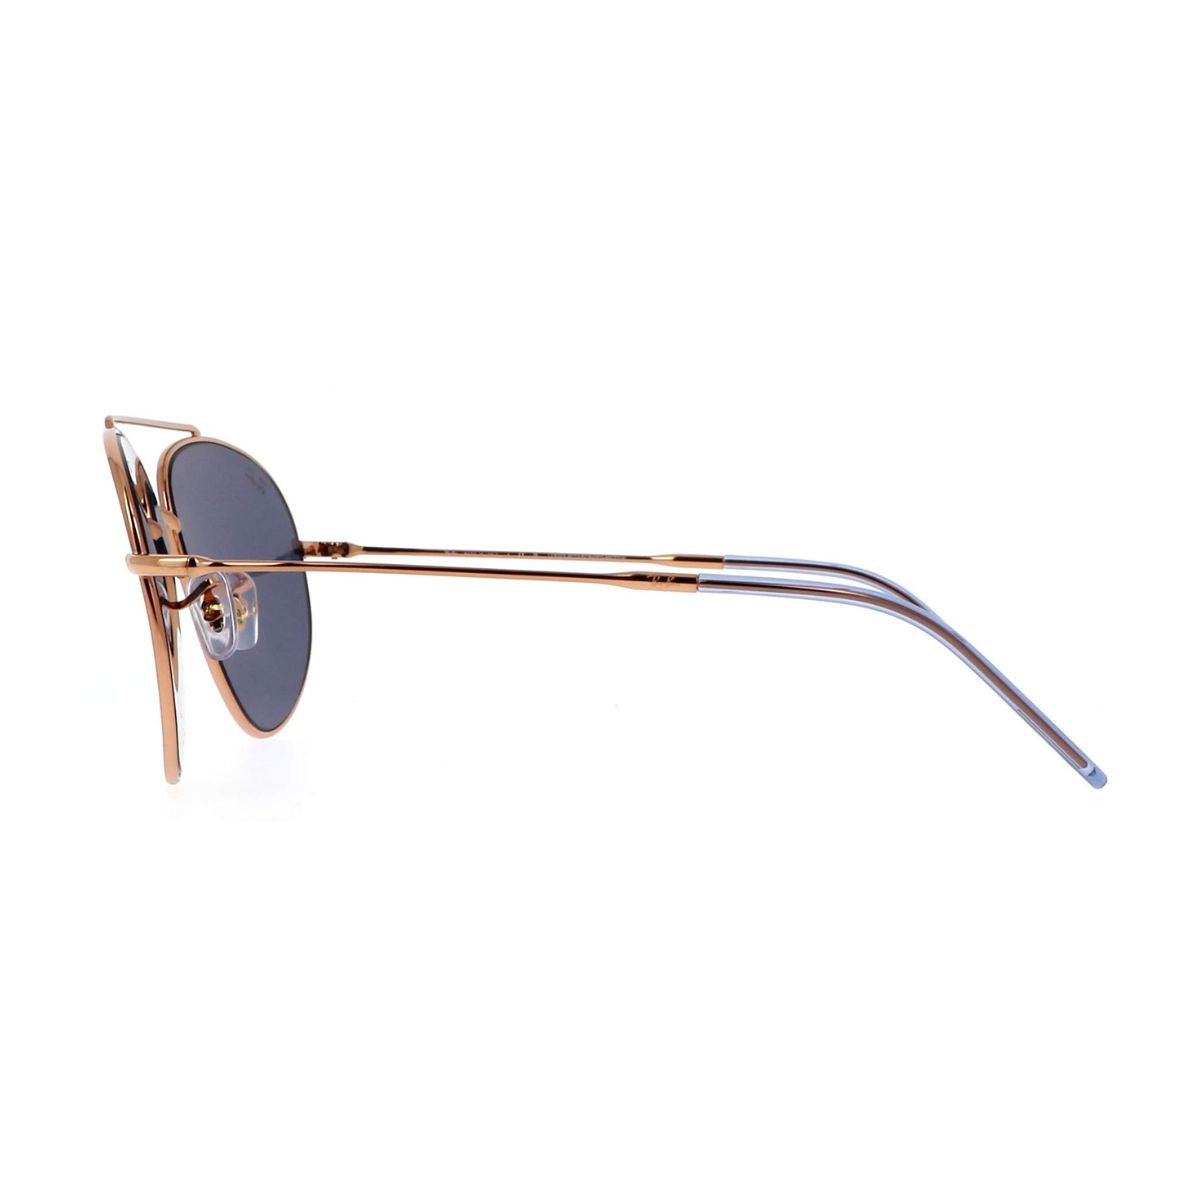 "Rayban 0101 9202/3a Reverce Aviator Style Sunglasses For Men At Optorium"